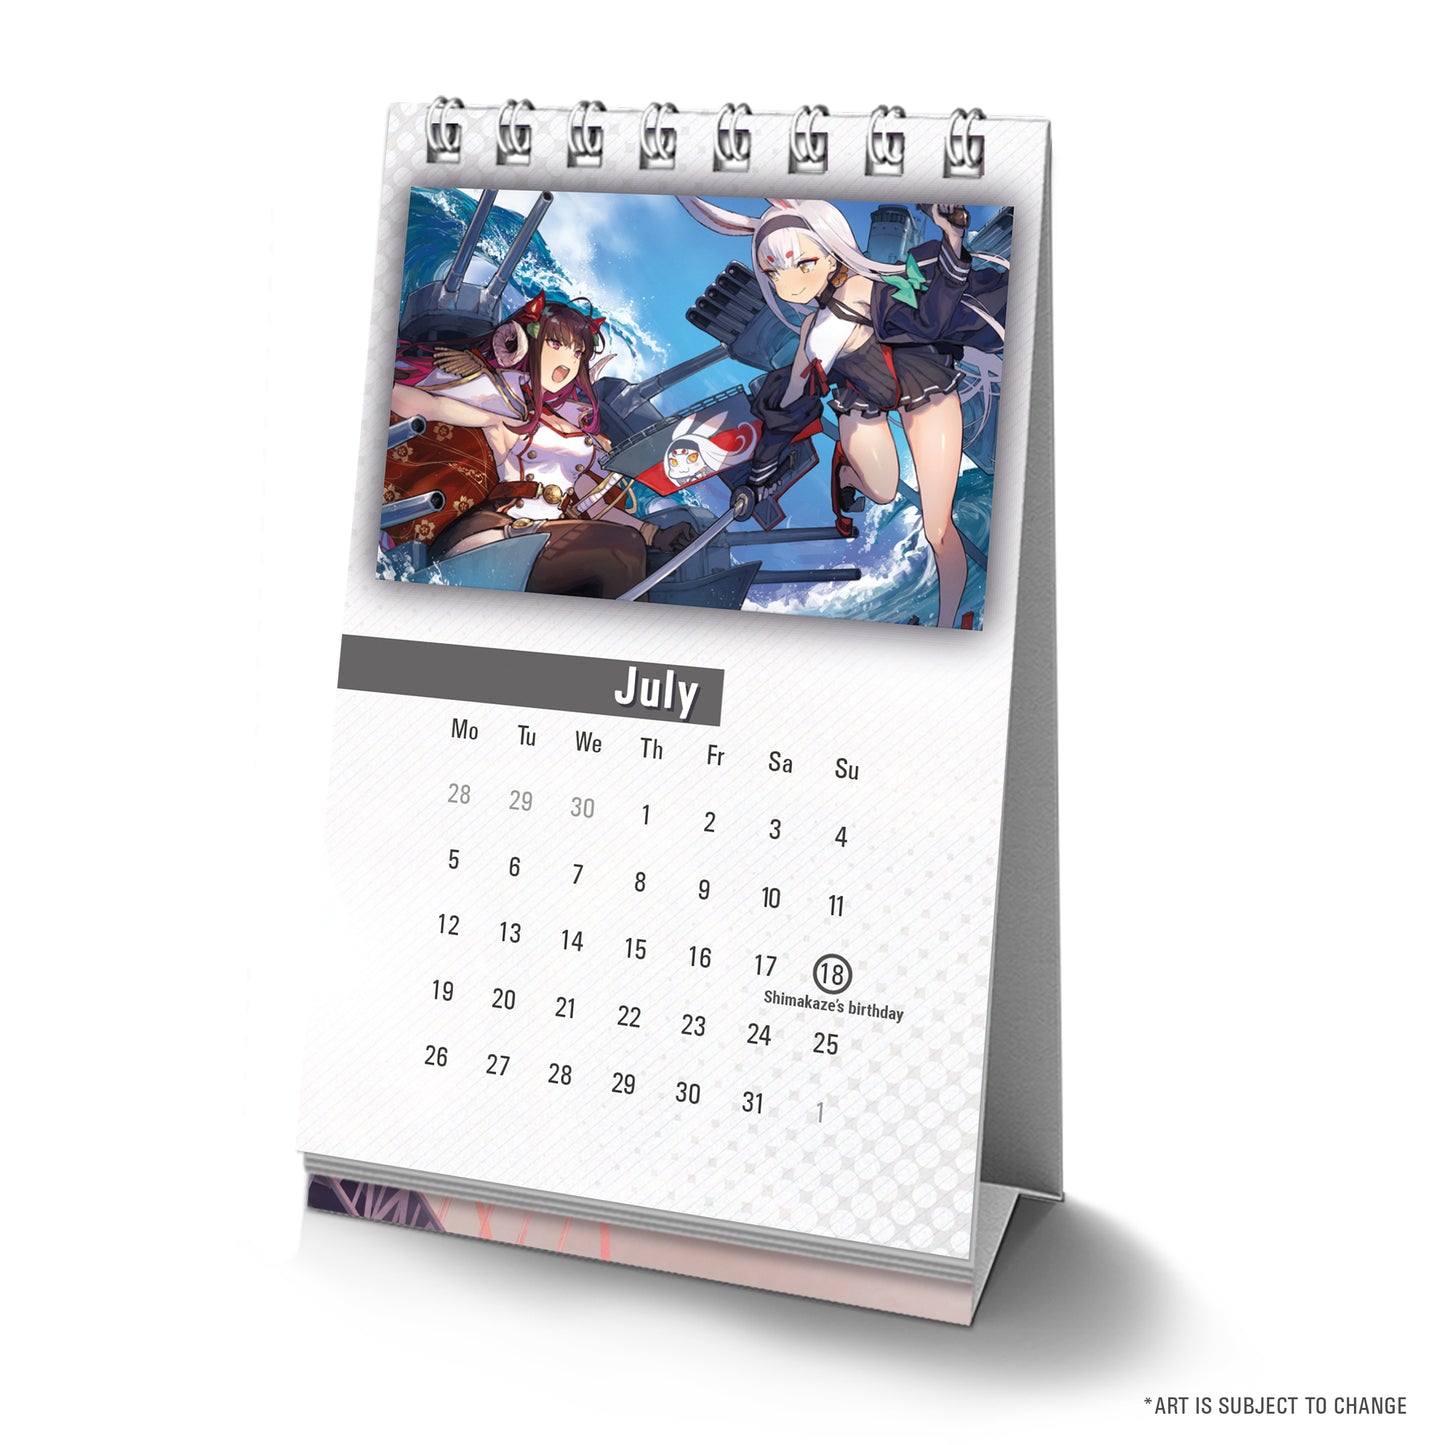 Azur Lane: Crosswave - Nintendo Switch™ - Commander's Calendar Edition